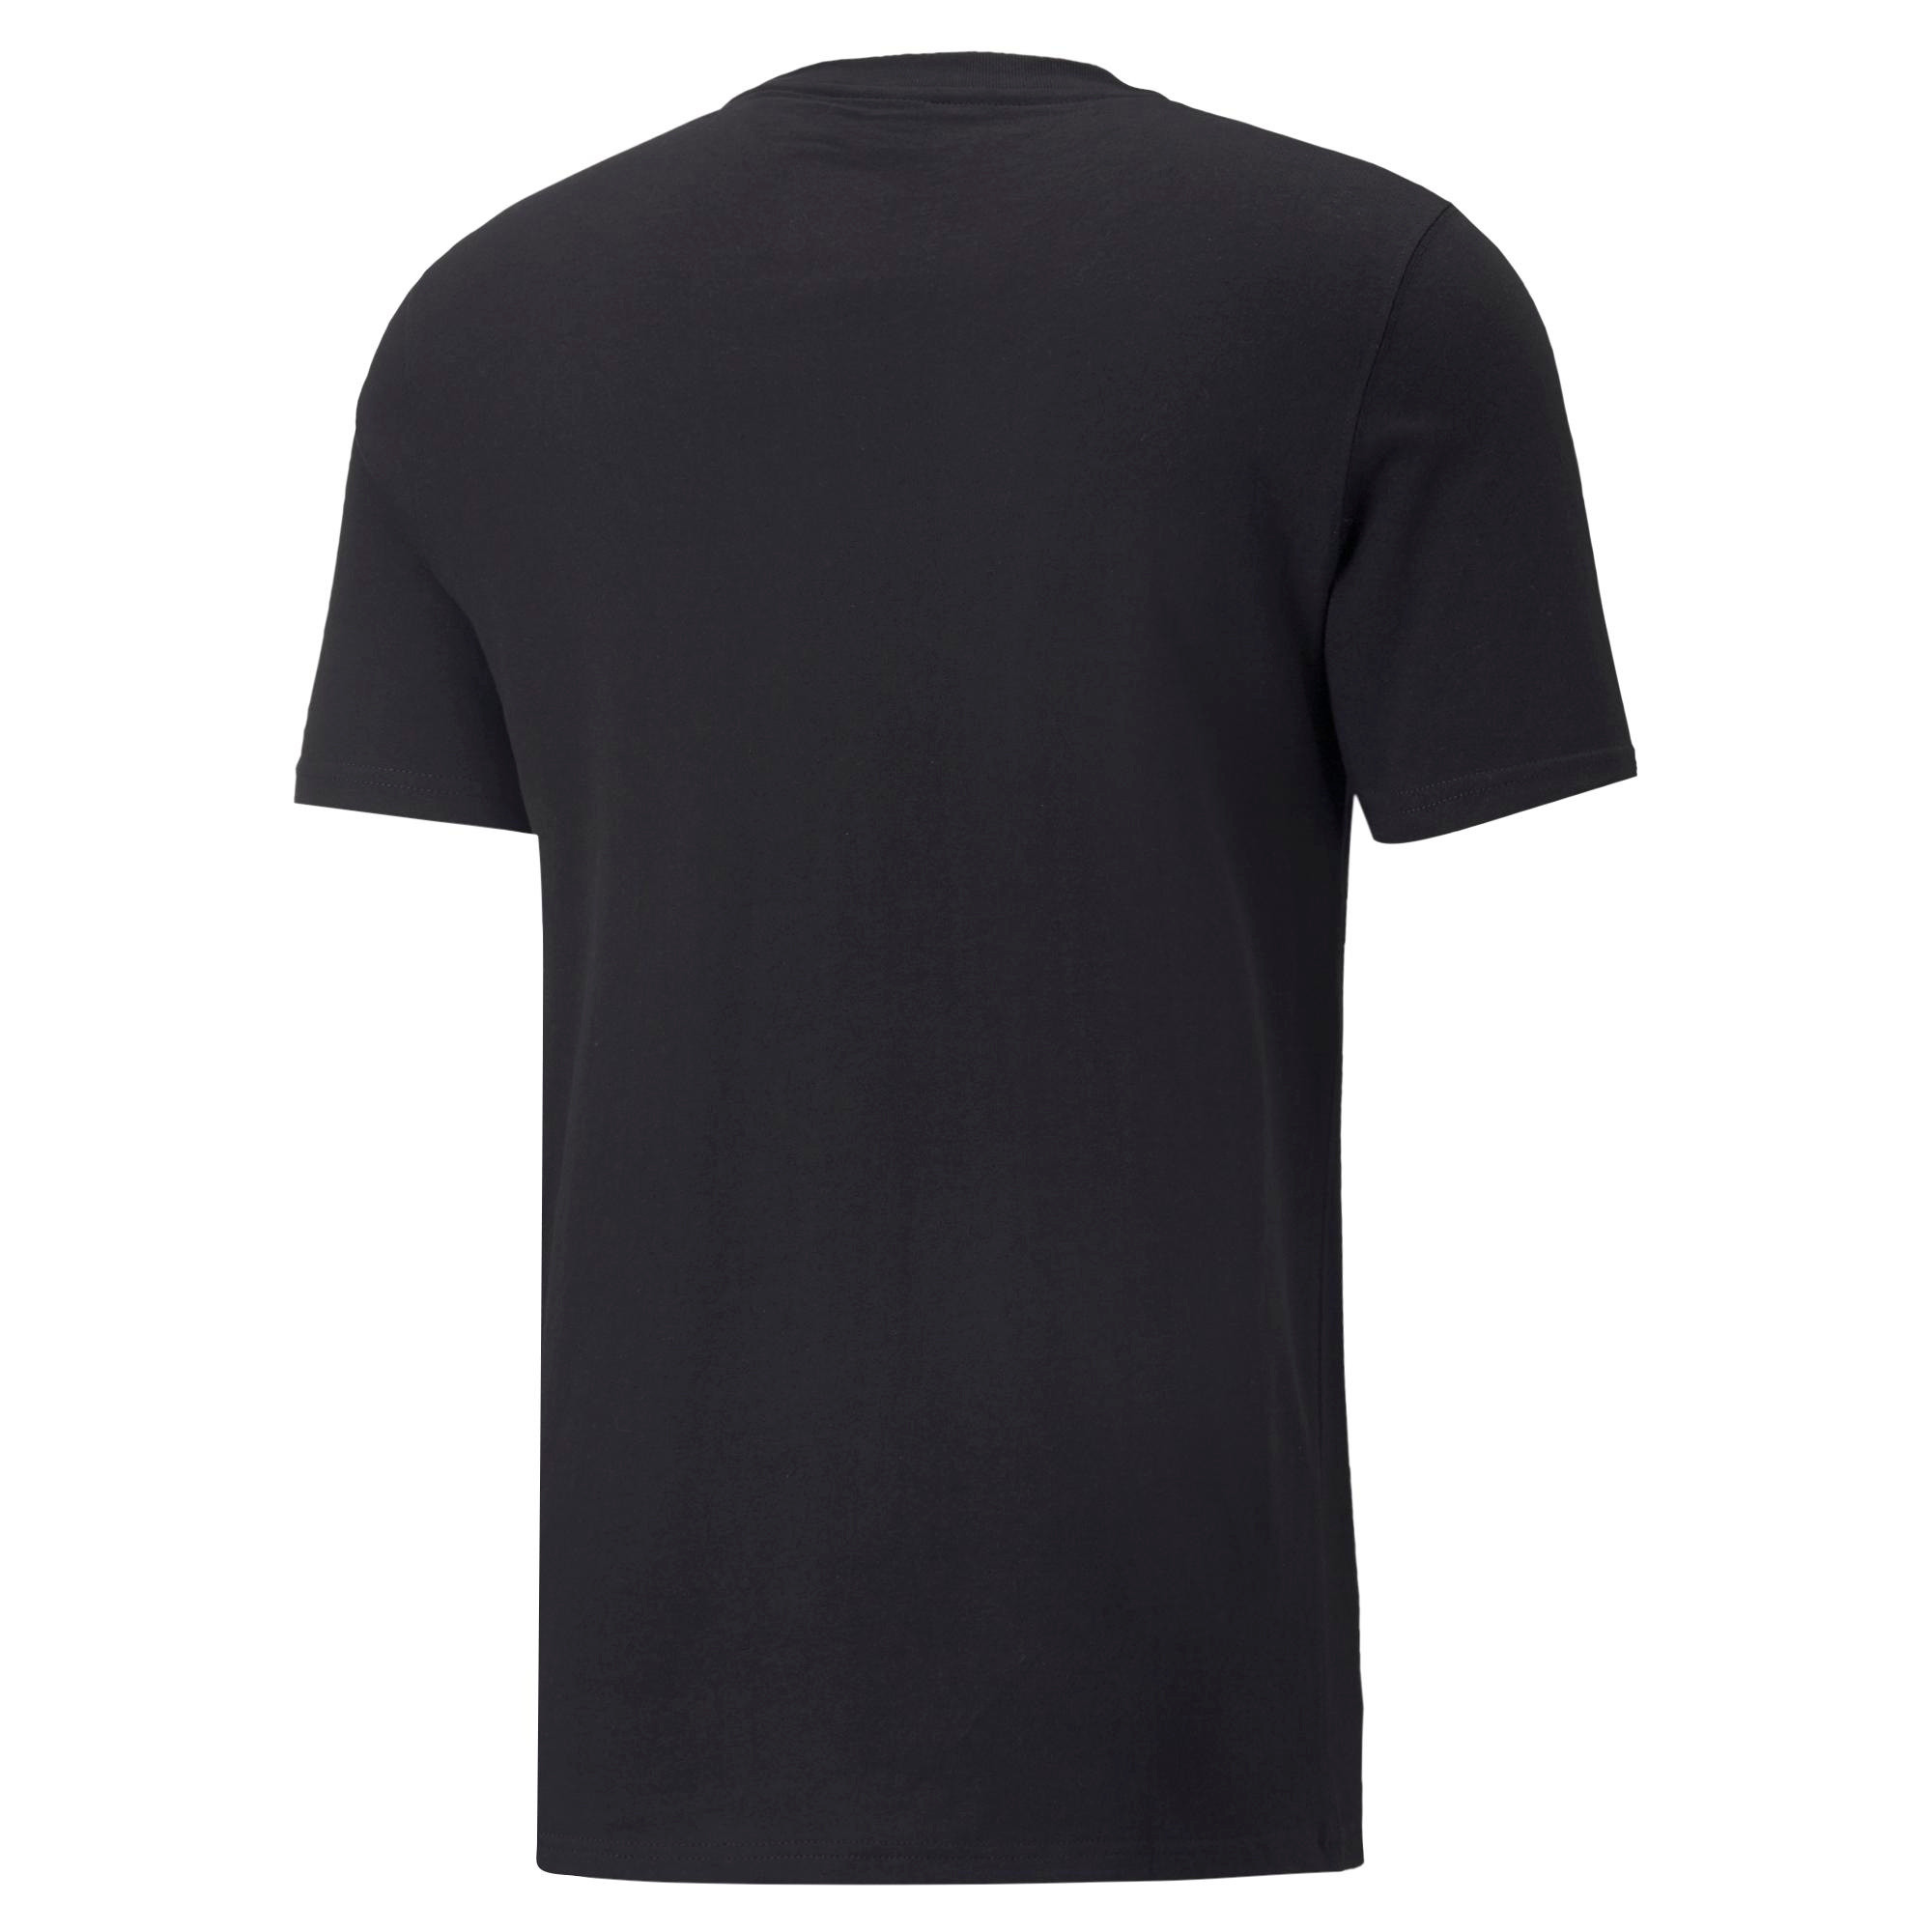 Fandom Graphic T-Shirt, Black, large image number 1